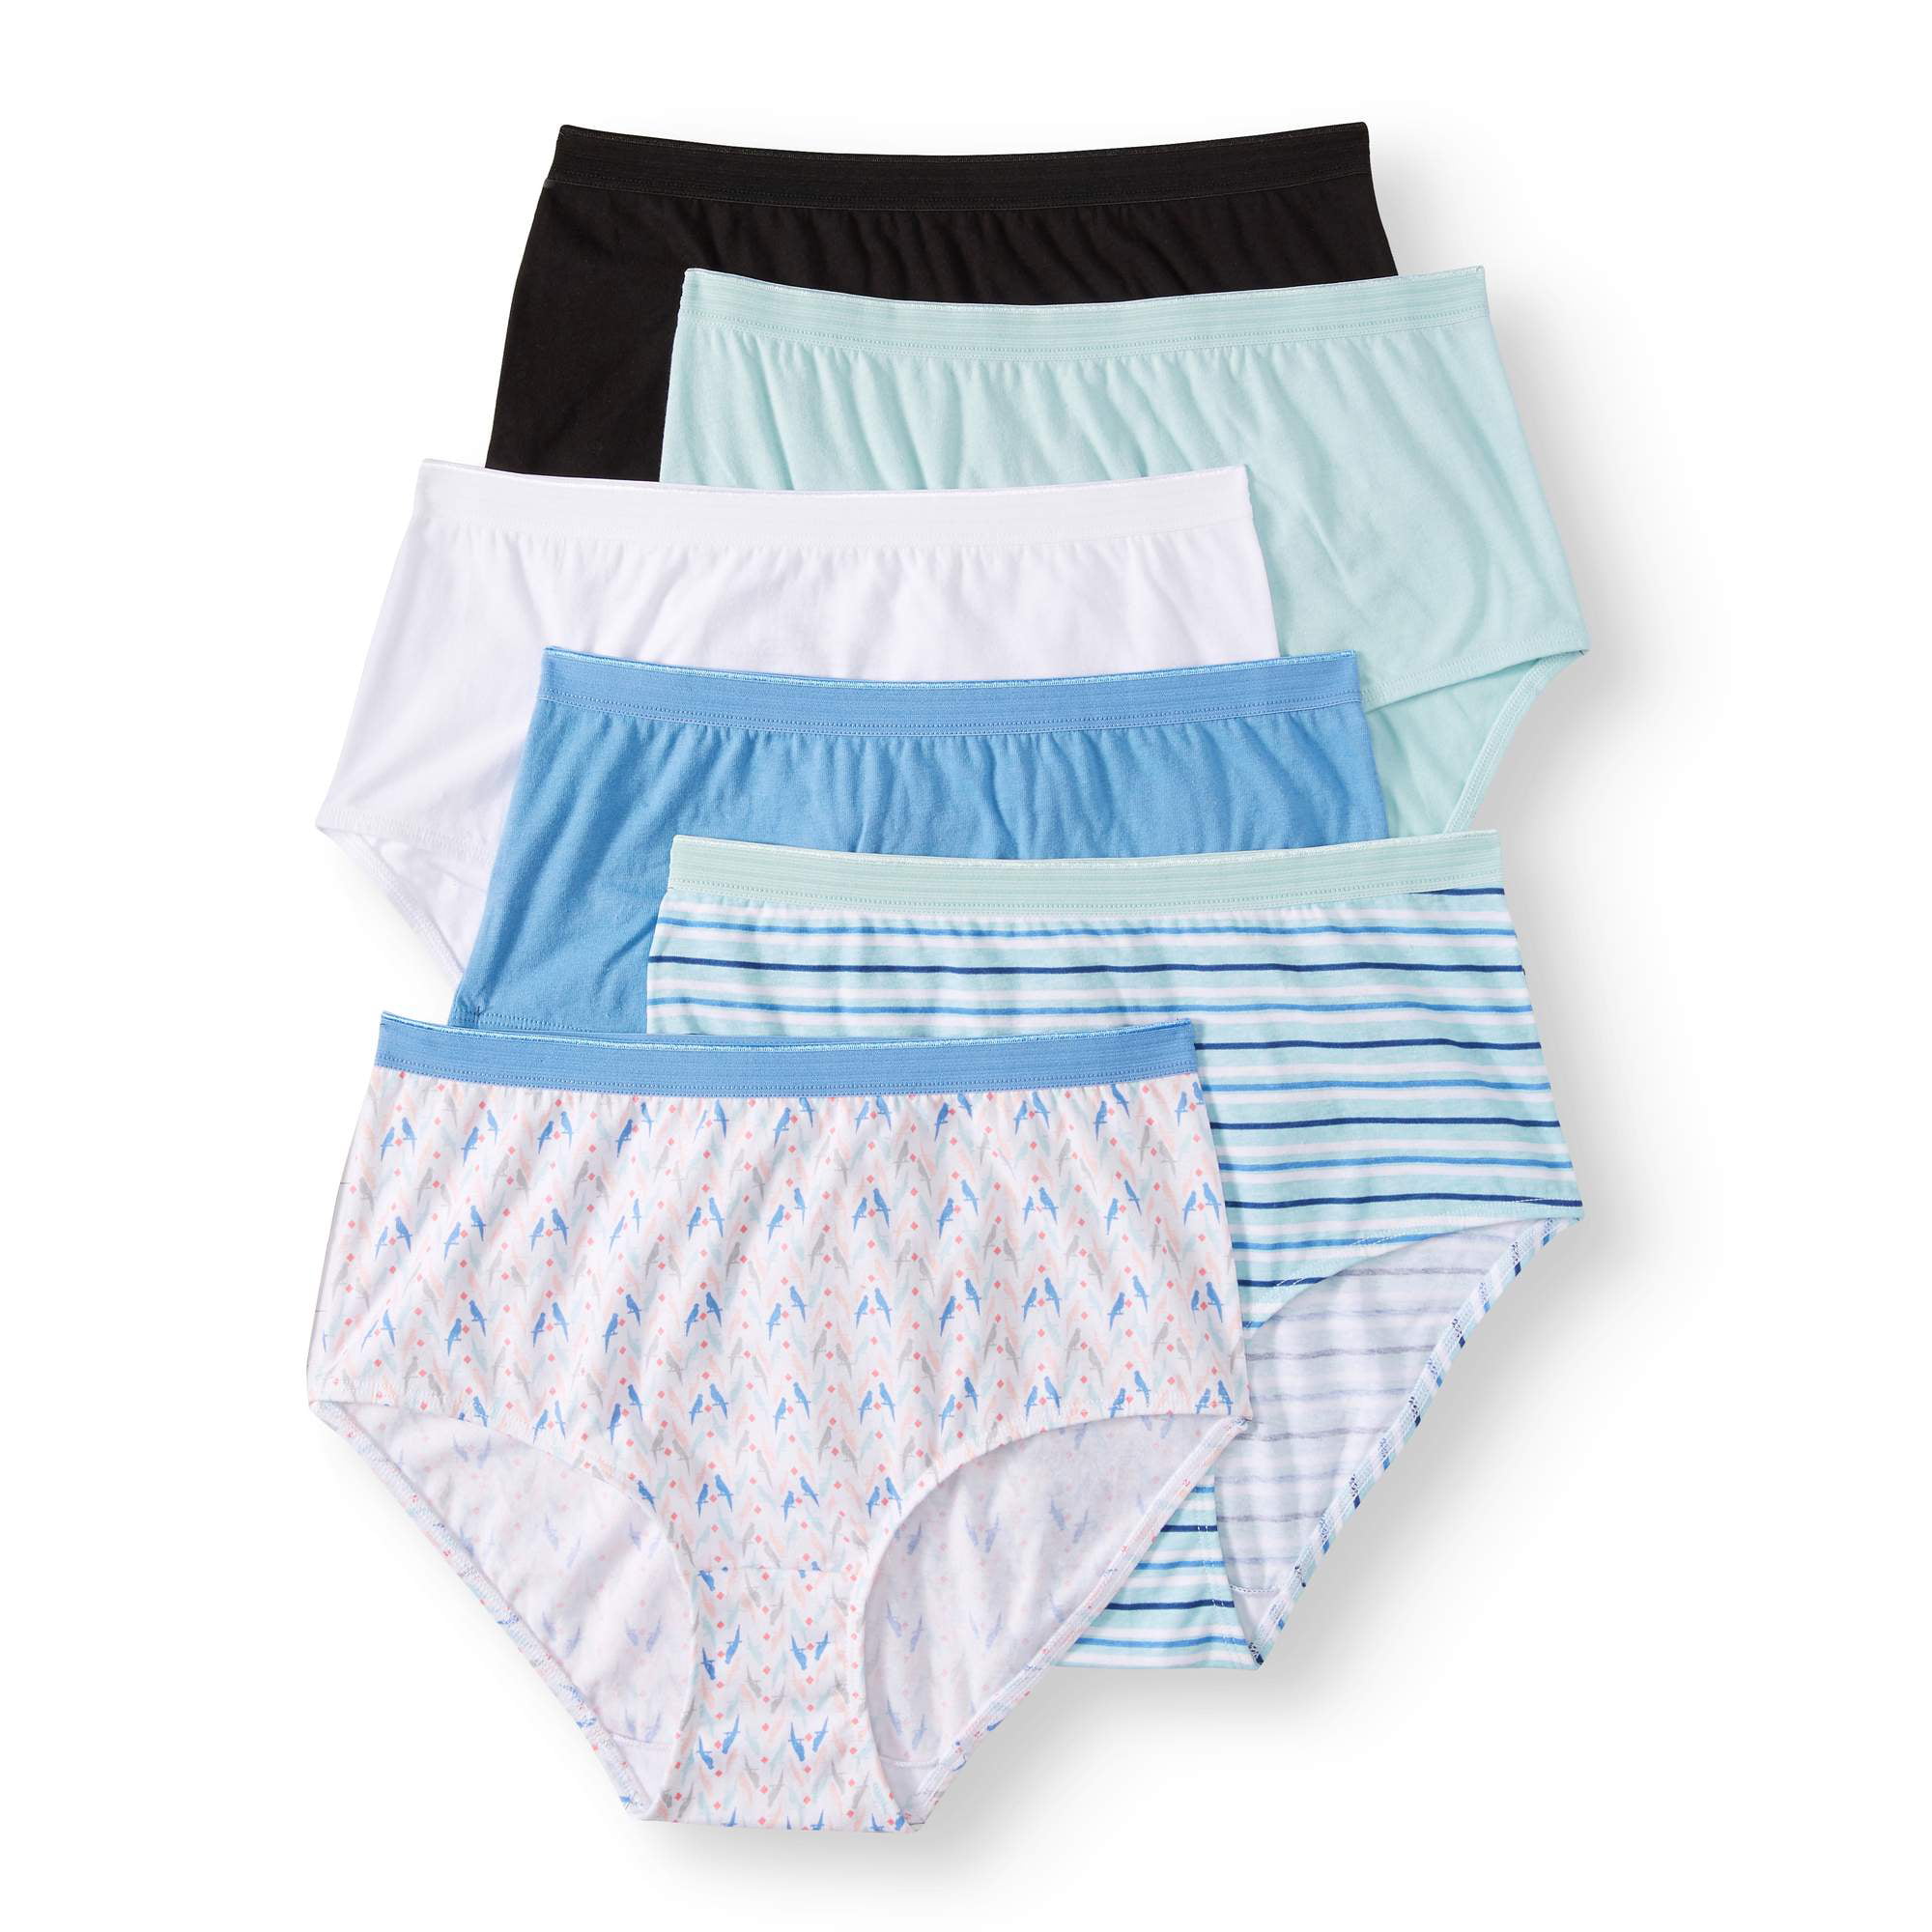 Cottonil Pack Of 6 Cotton 100% Underwear Panties For Women @ Best Price  Online